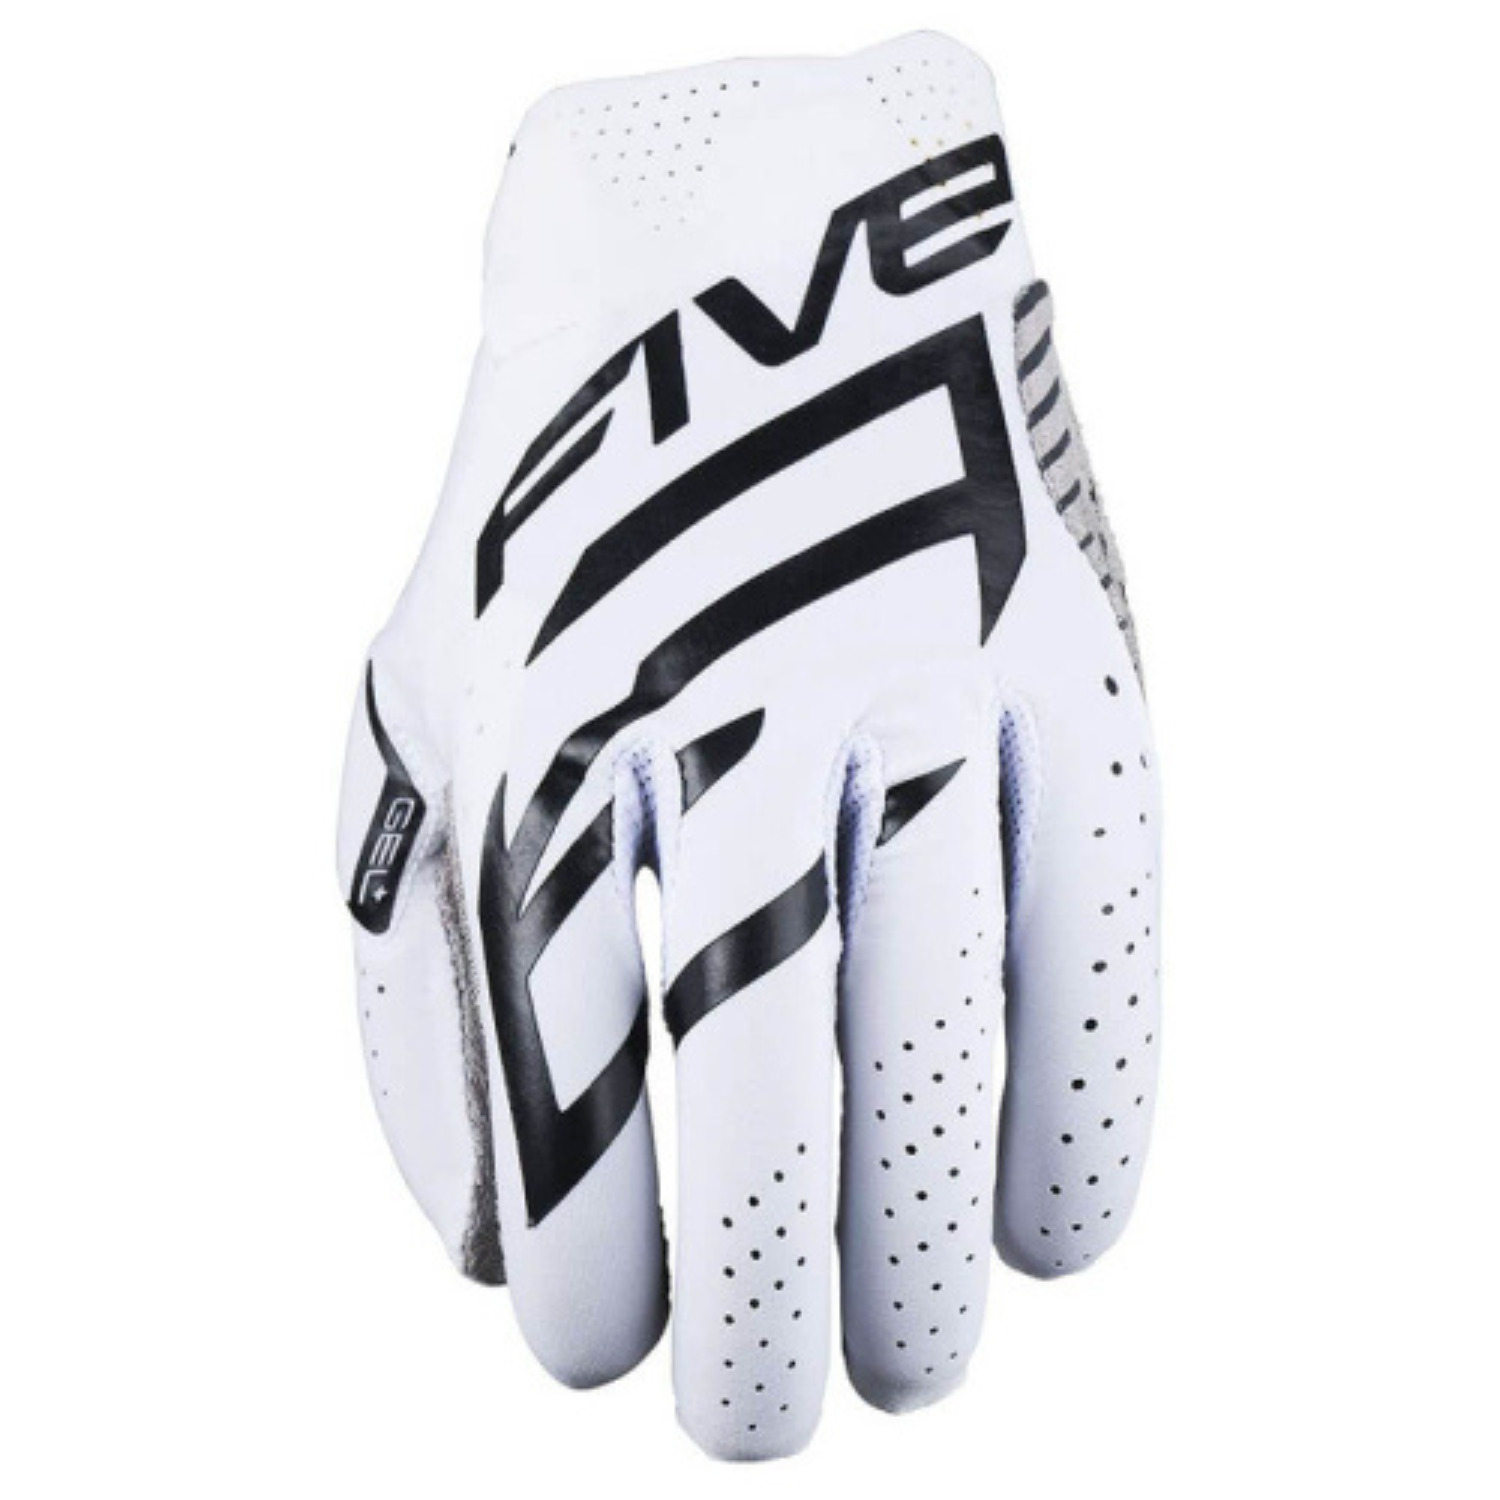 Image of Five MXF Race Gloves White Black Größe L